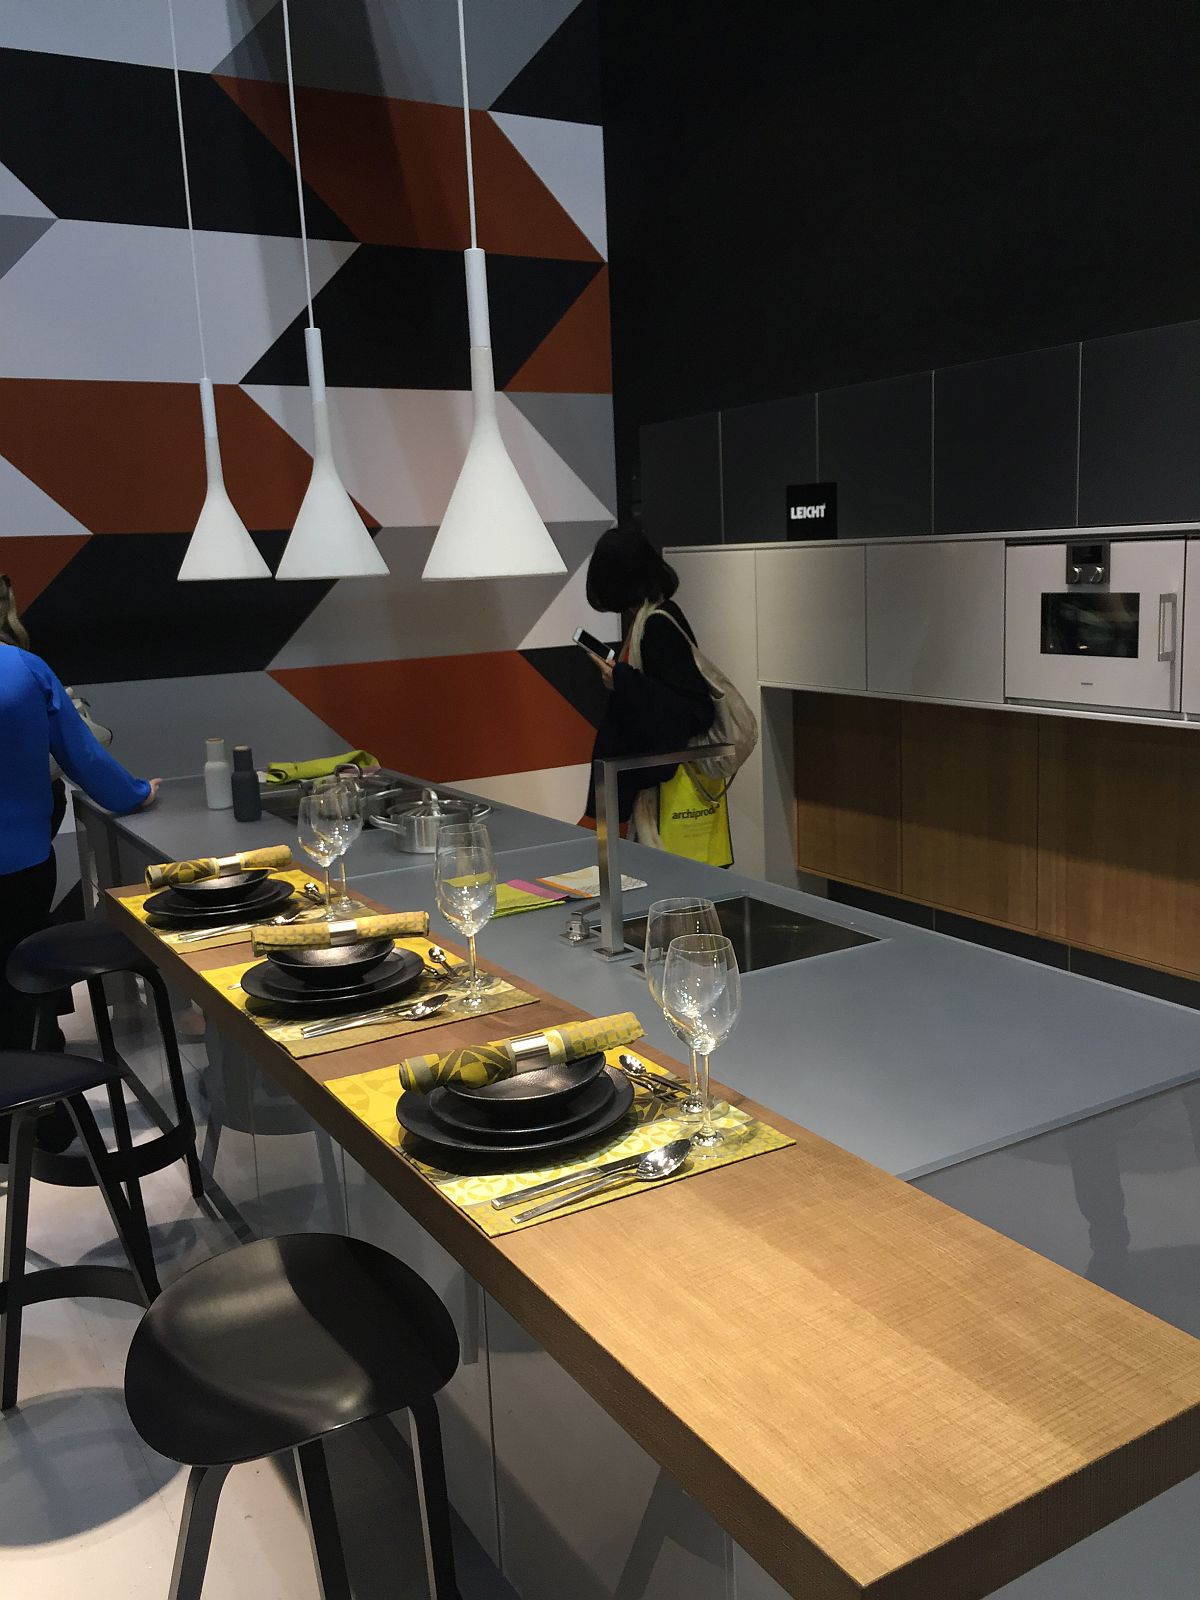 Contemporary kitchen island with breakfast zone - Leicht at EuroCucina 2016